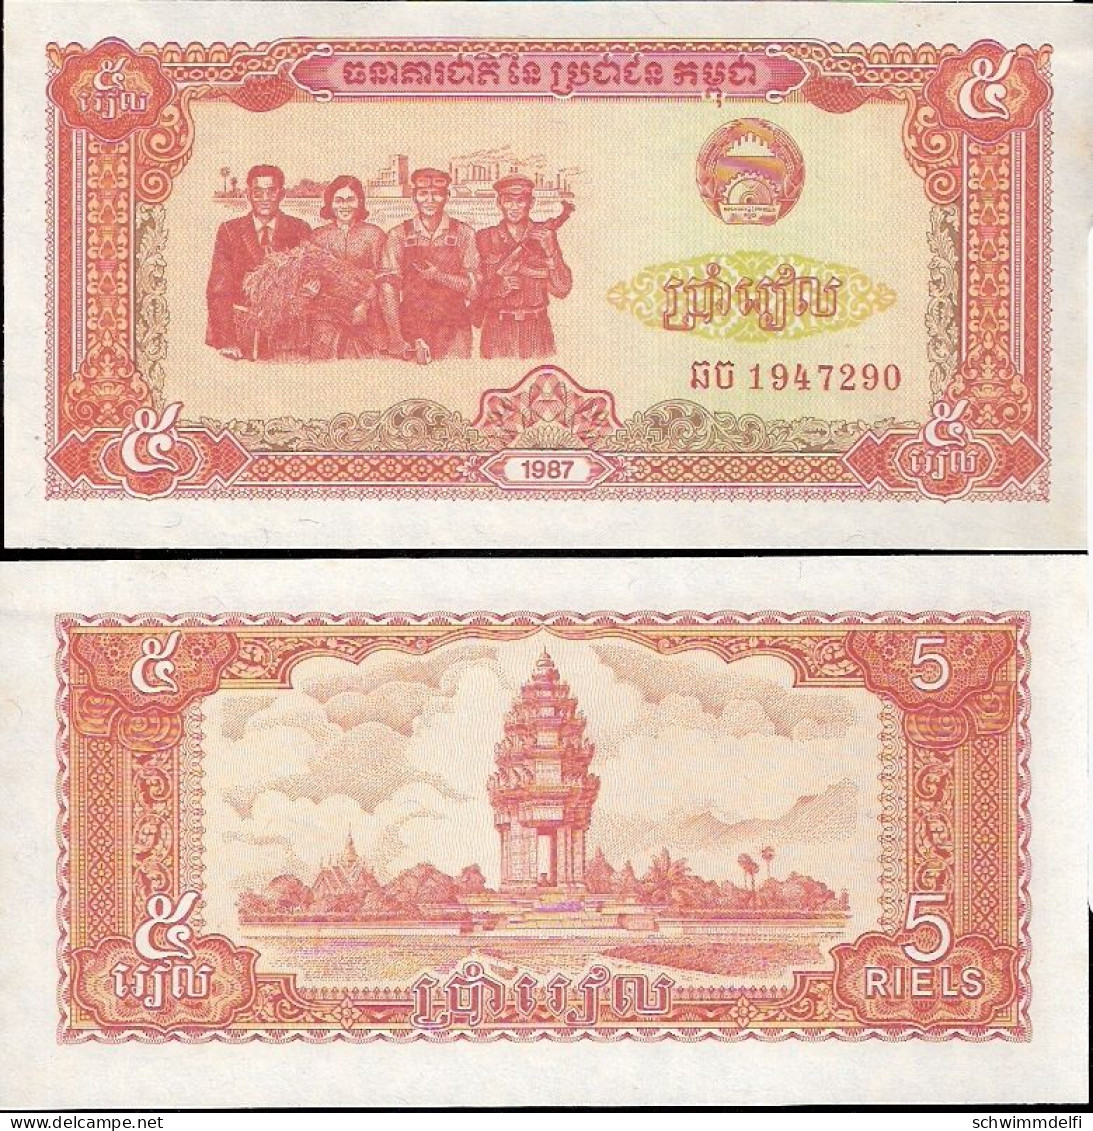 KAMBODSCHA, CAMBODIA, CAMBOYA - 5 RIELS 1987 - SIN CIRCULAR - UNZIRKULIERT - - Cambodge